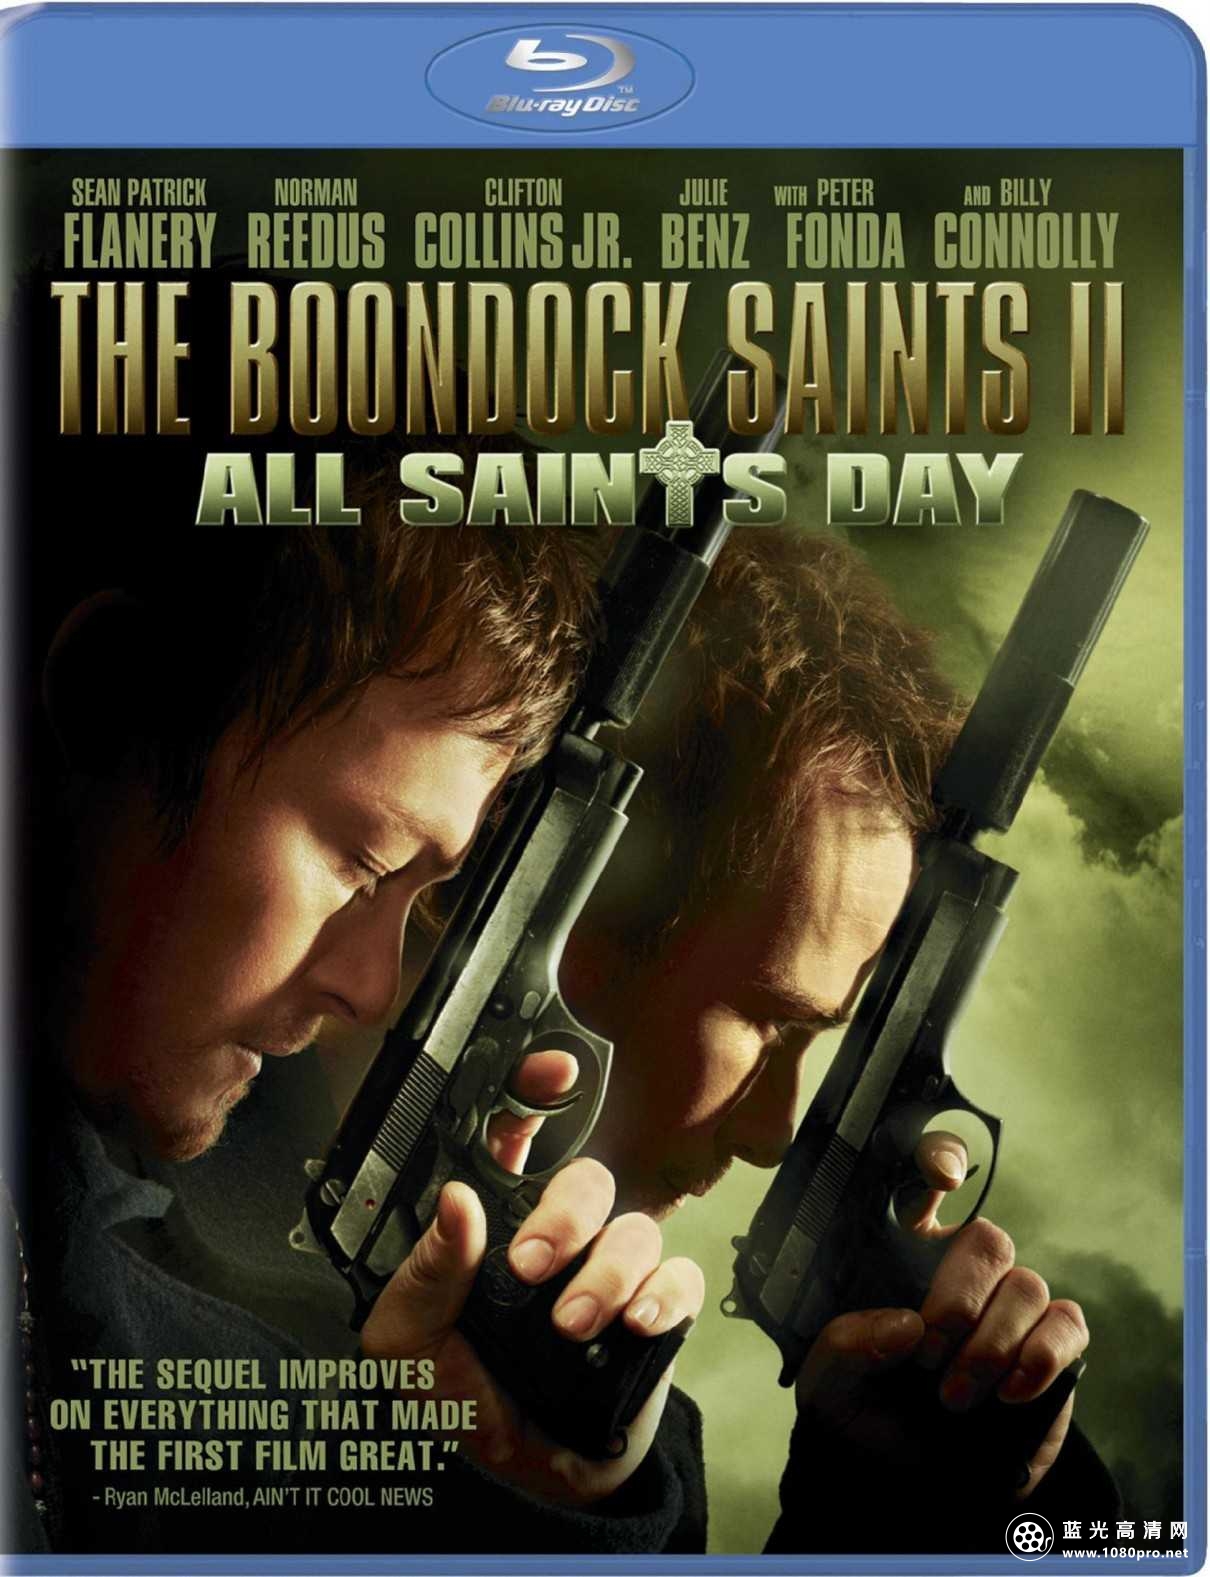 处刑人2 The.Boondock.Saints.II.All.Saints.Day.2009.BluRay.720p.DTS.x264-CHD 6.5GB-1.jpg